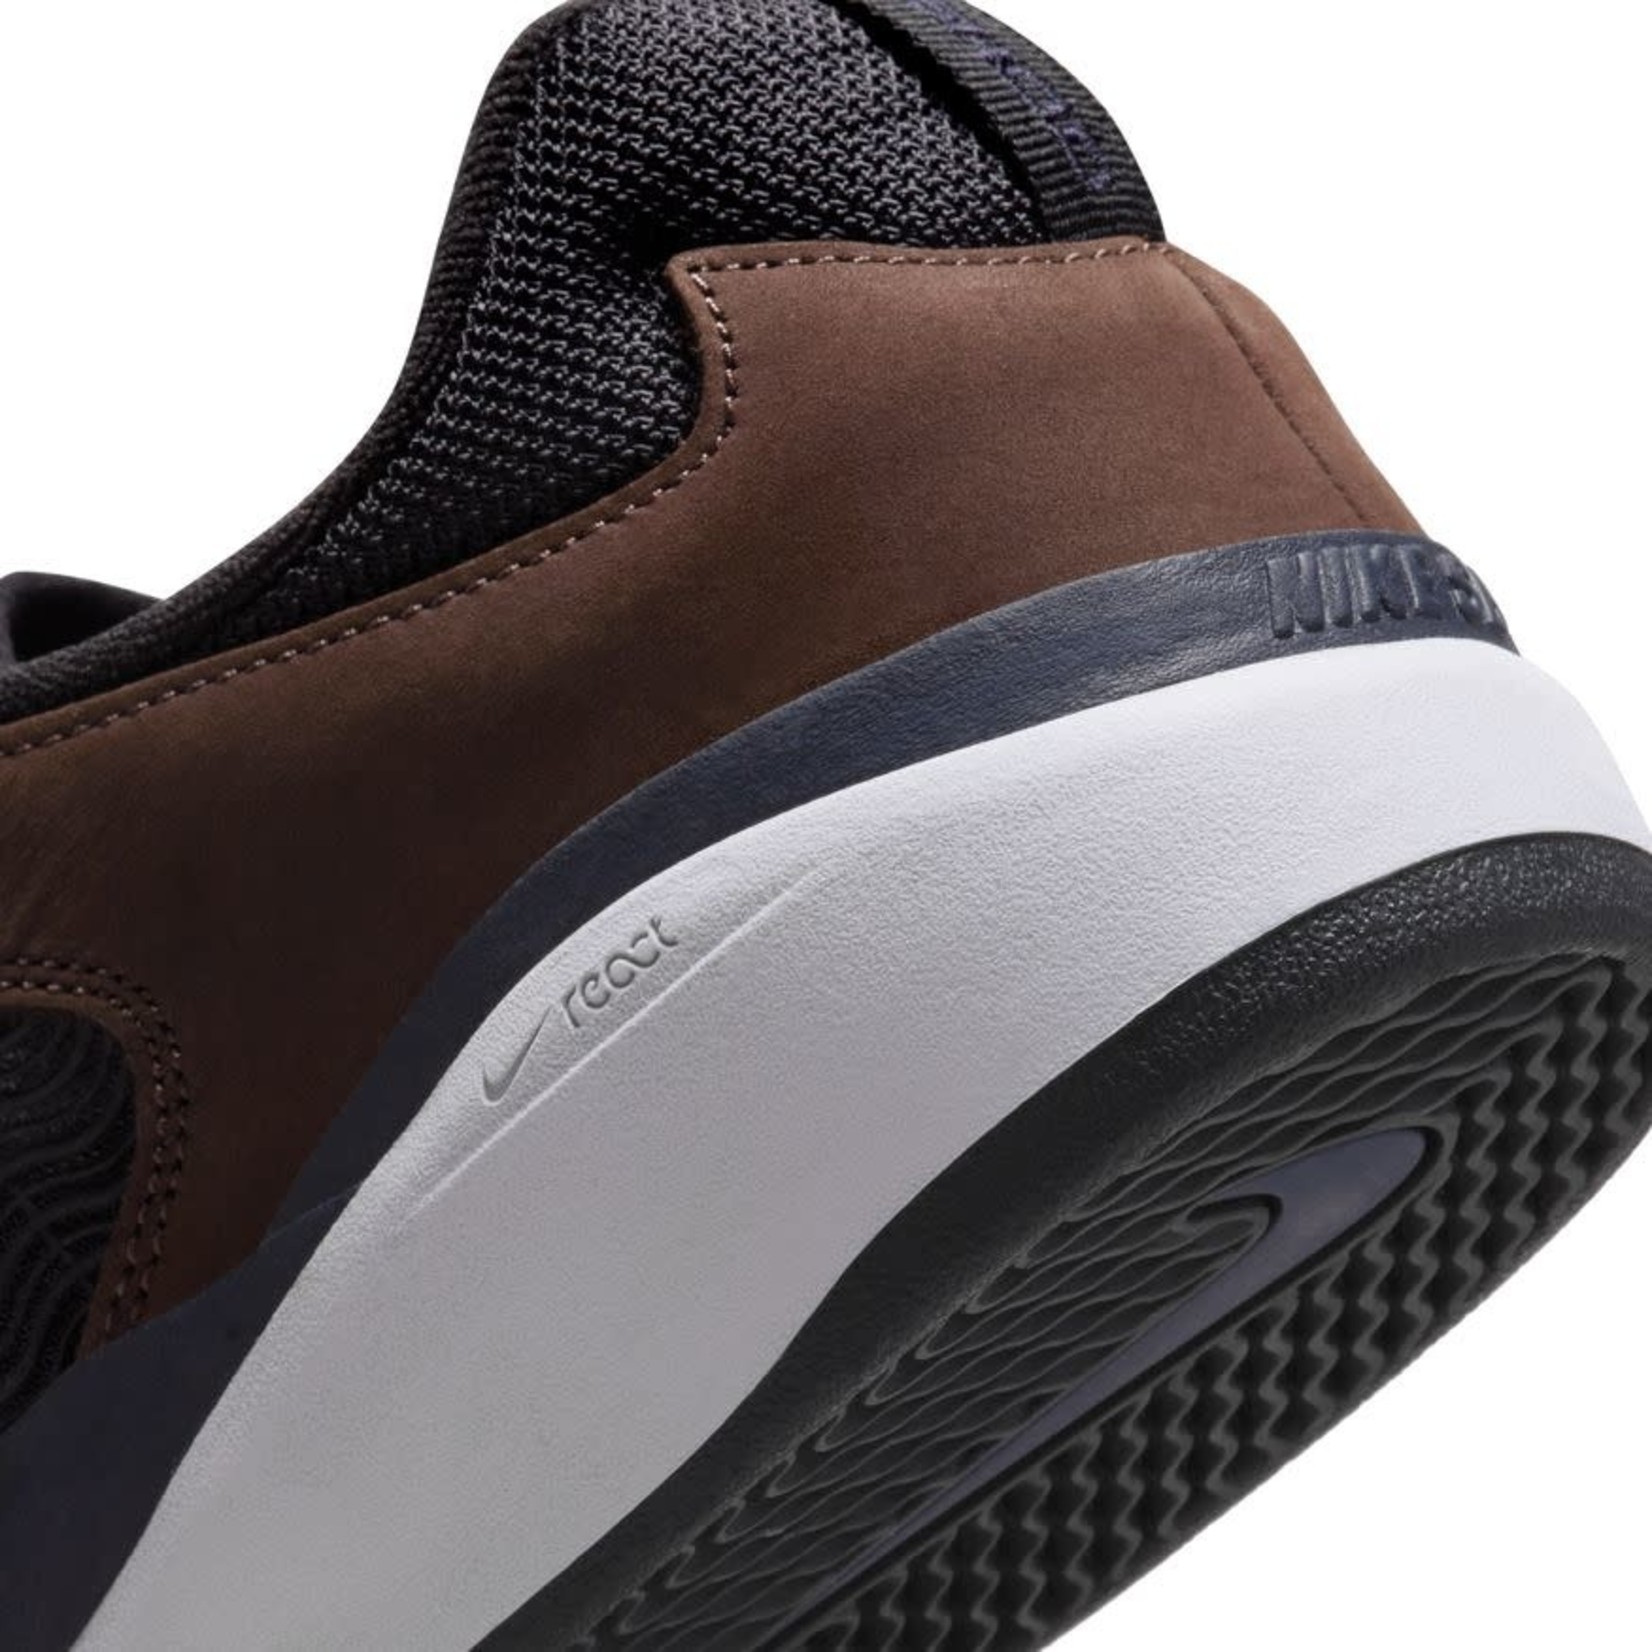 Nike SB Nike SB Ishod Wair Premium “Baroque Brown/Obsidian”